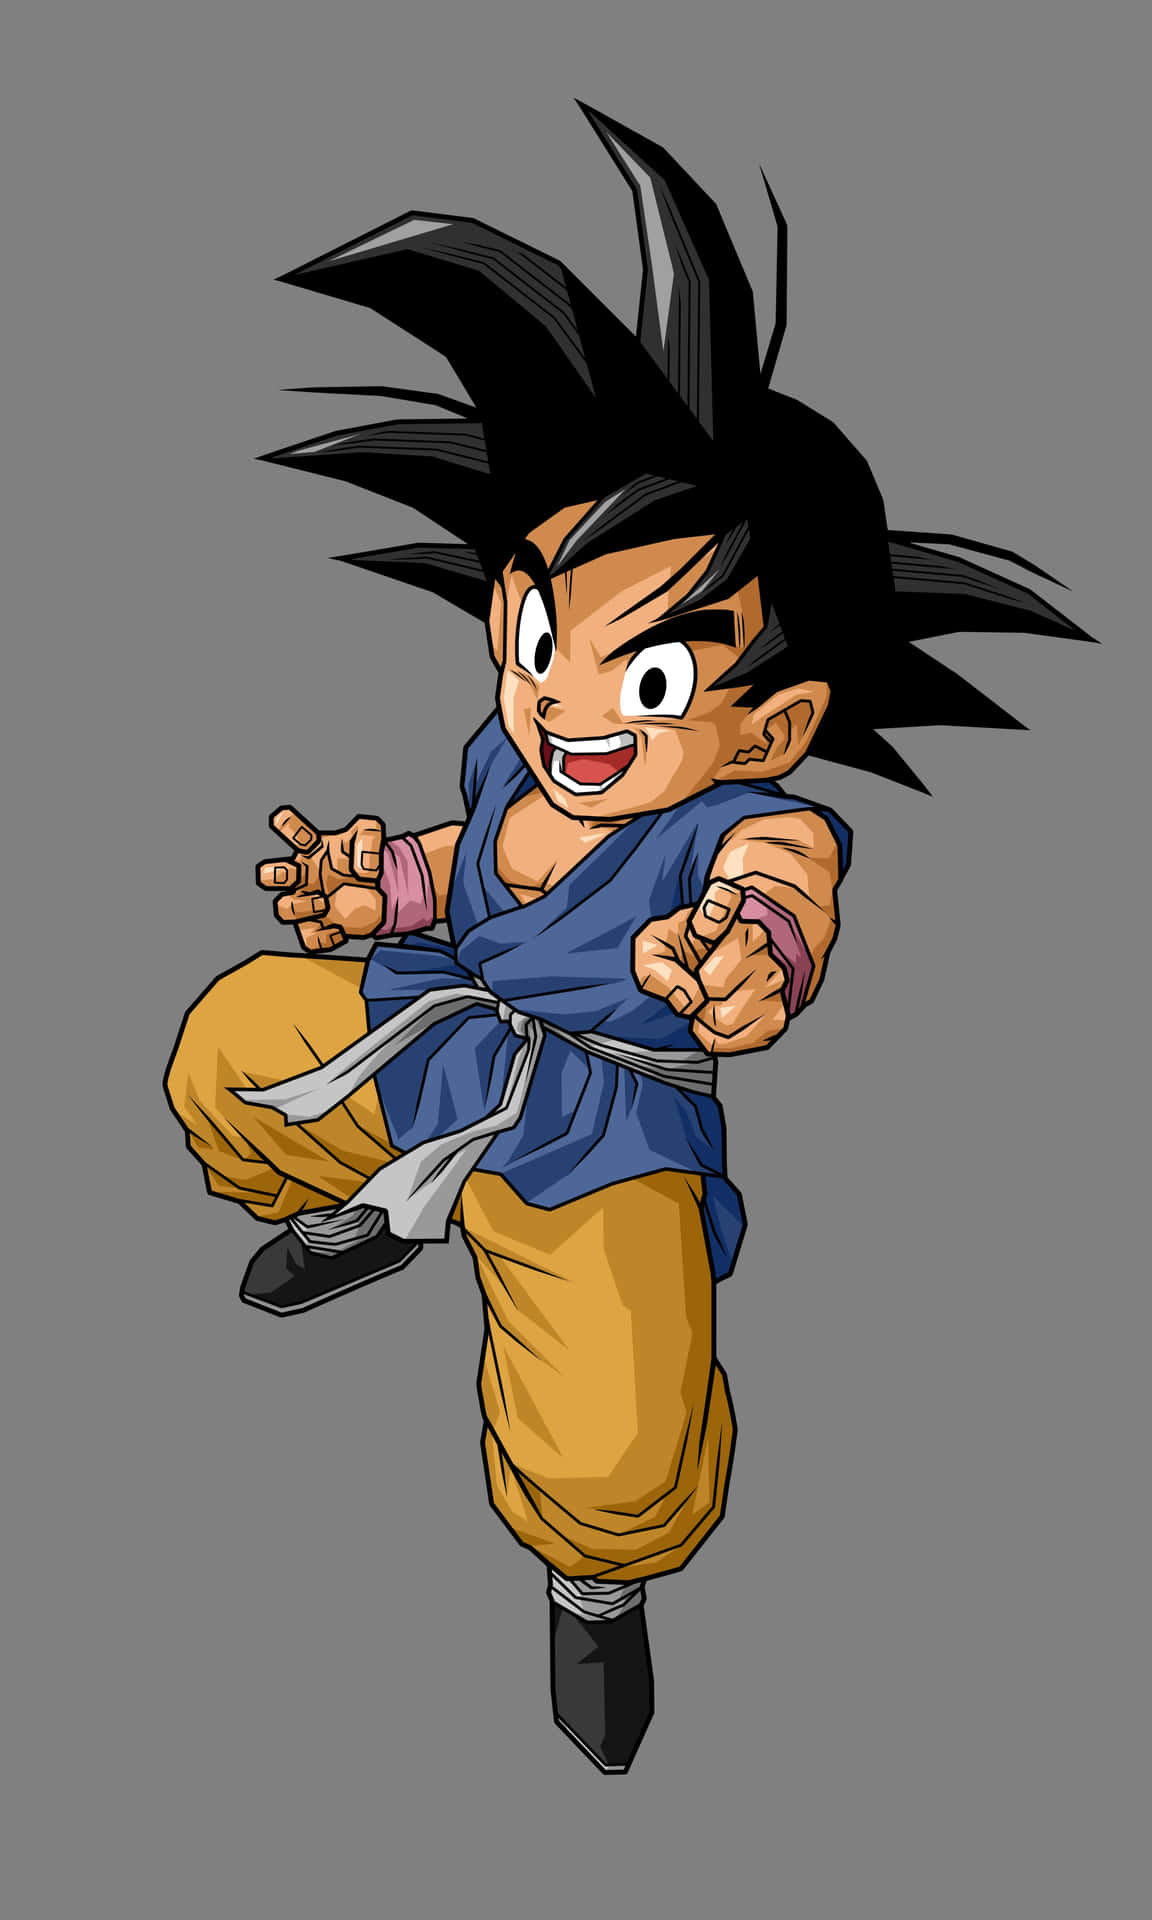 Super Saiyan 4 Goku sender kraftig energi-stråle. Wallpaper